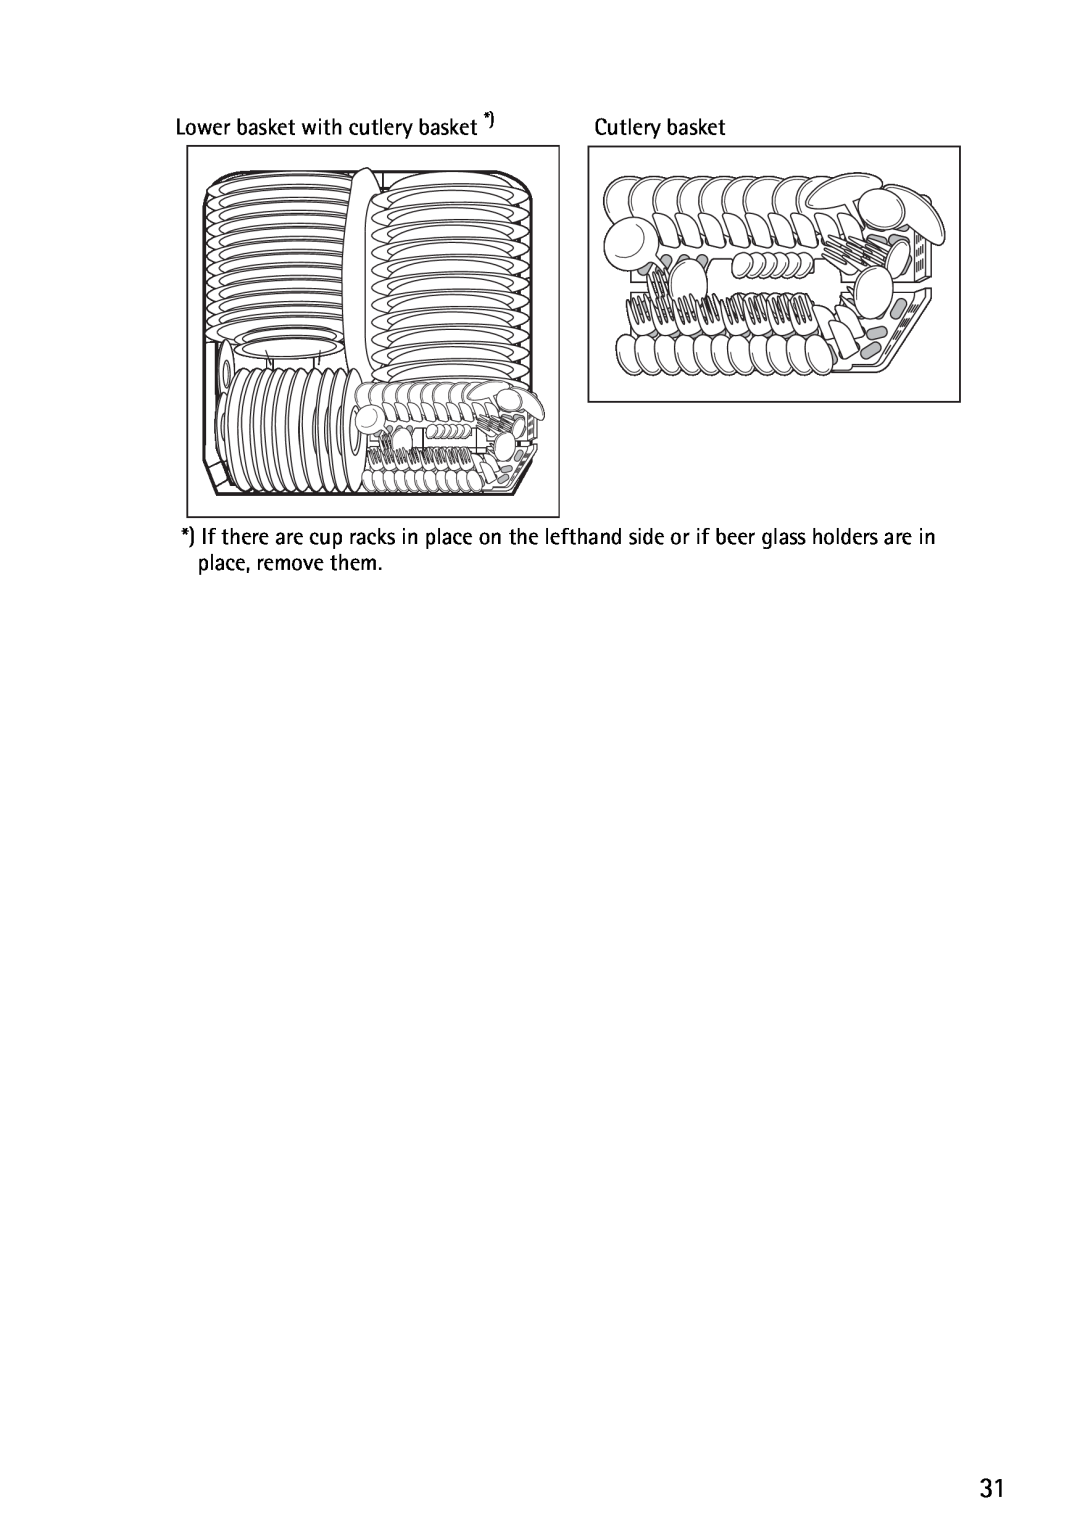 John Lewis JLDWS1202 instruction manual Lower basket with cutlery basket, Cutlery basket 